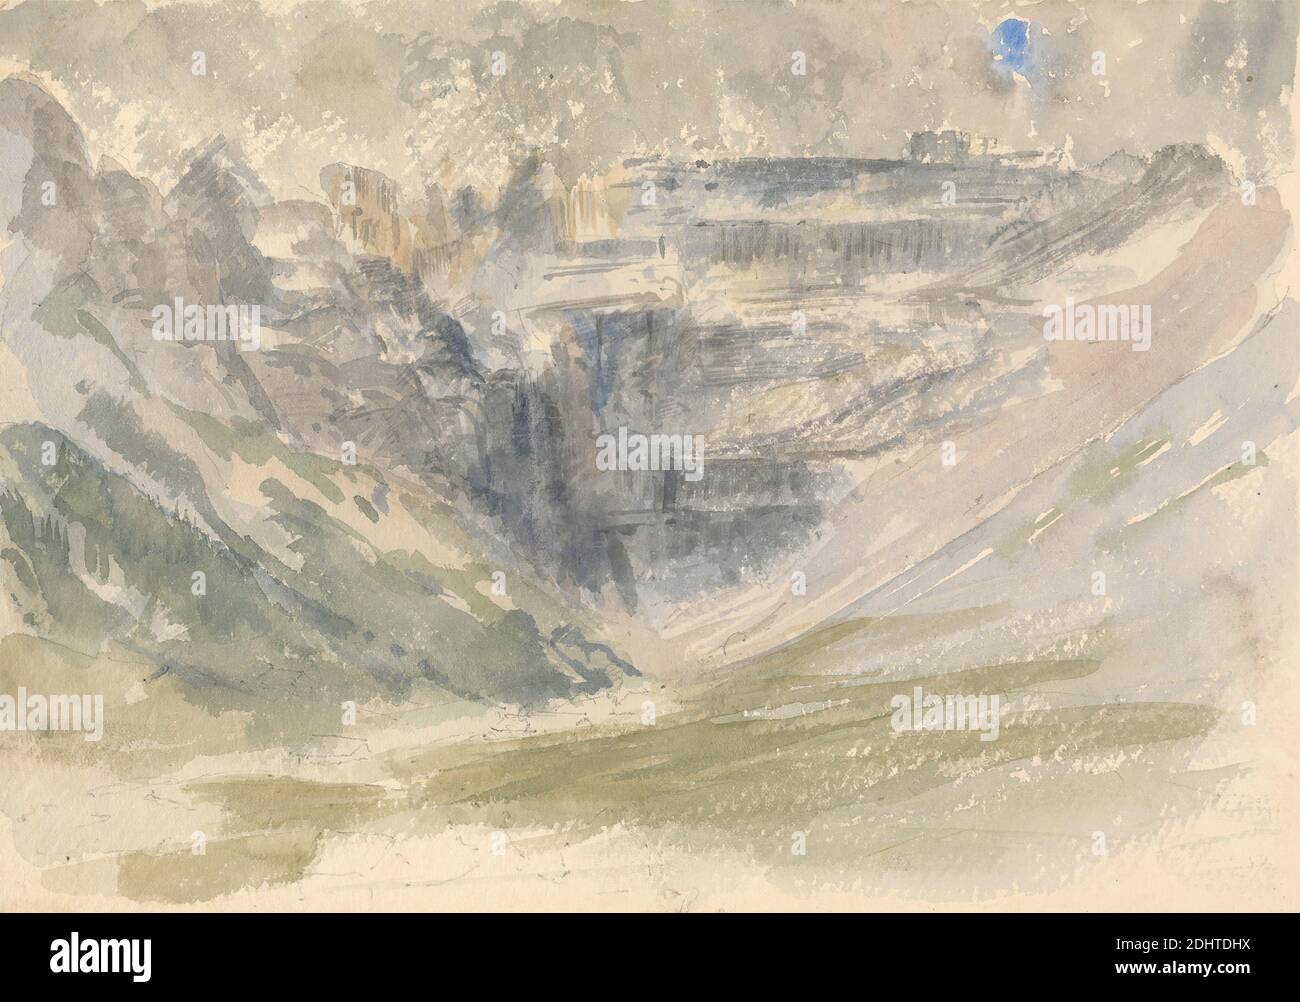 Paisaje montañoso, artista desconocido, siglo XIX, sin fecha, acuarela y grafito sobre papel grueso, de textura moderada, de hoja: 7 × 10 pulgadas (17.8 × 25.4 cm), paisaje, montañas Foto de stock